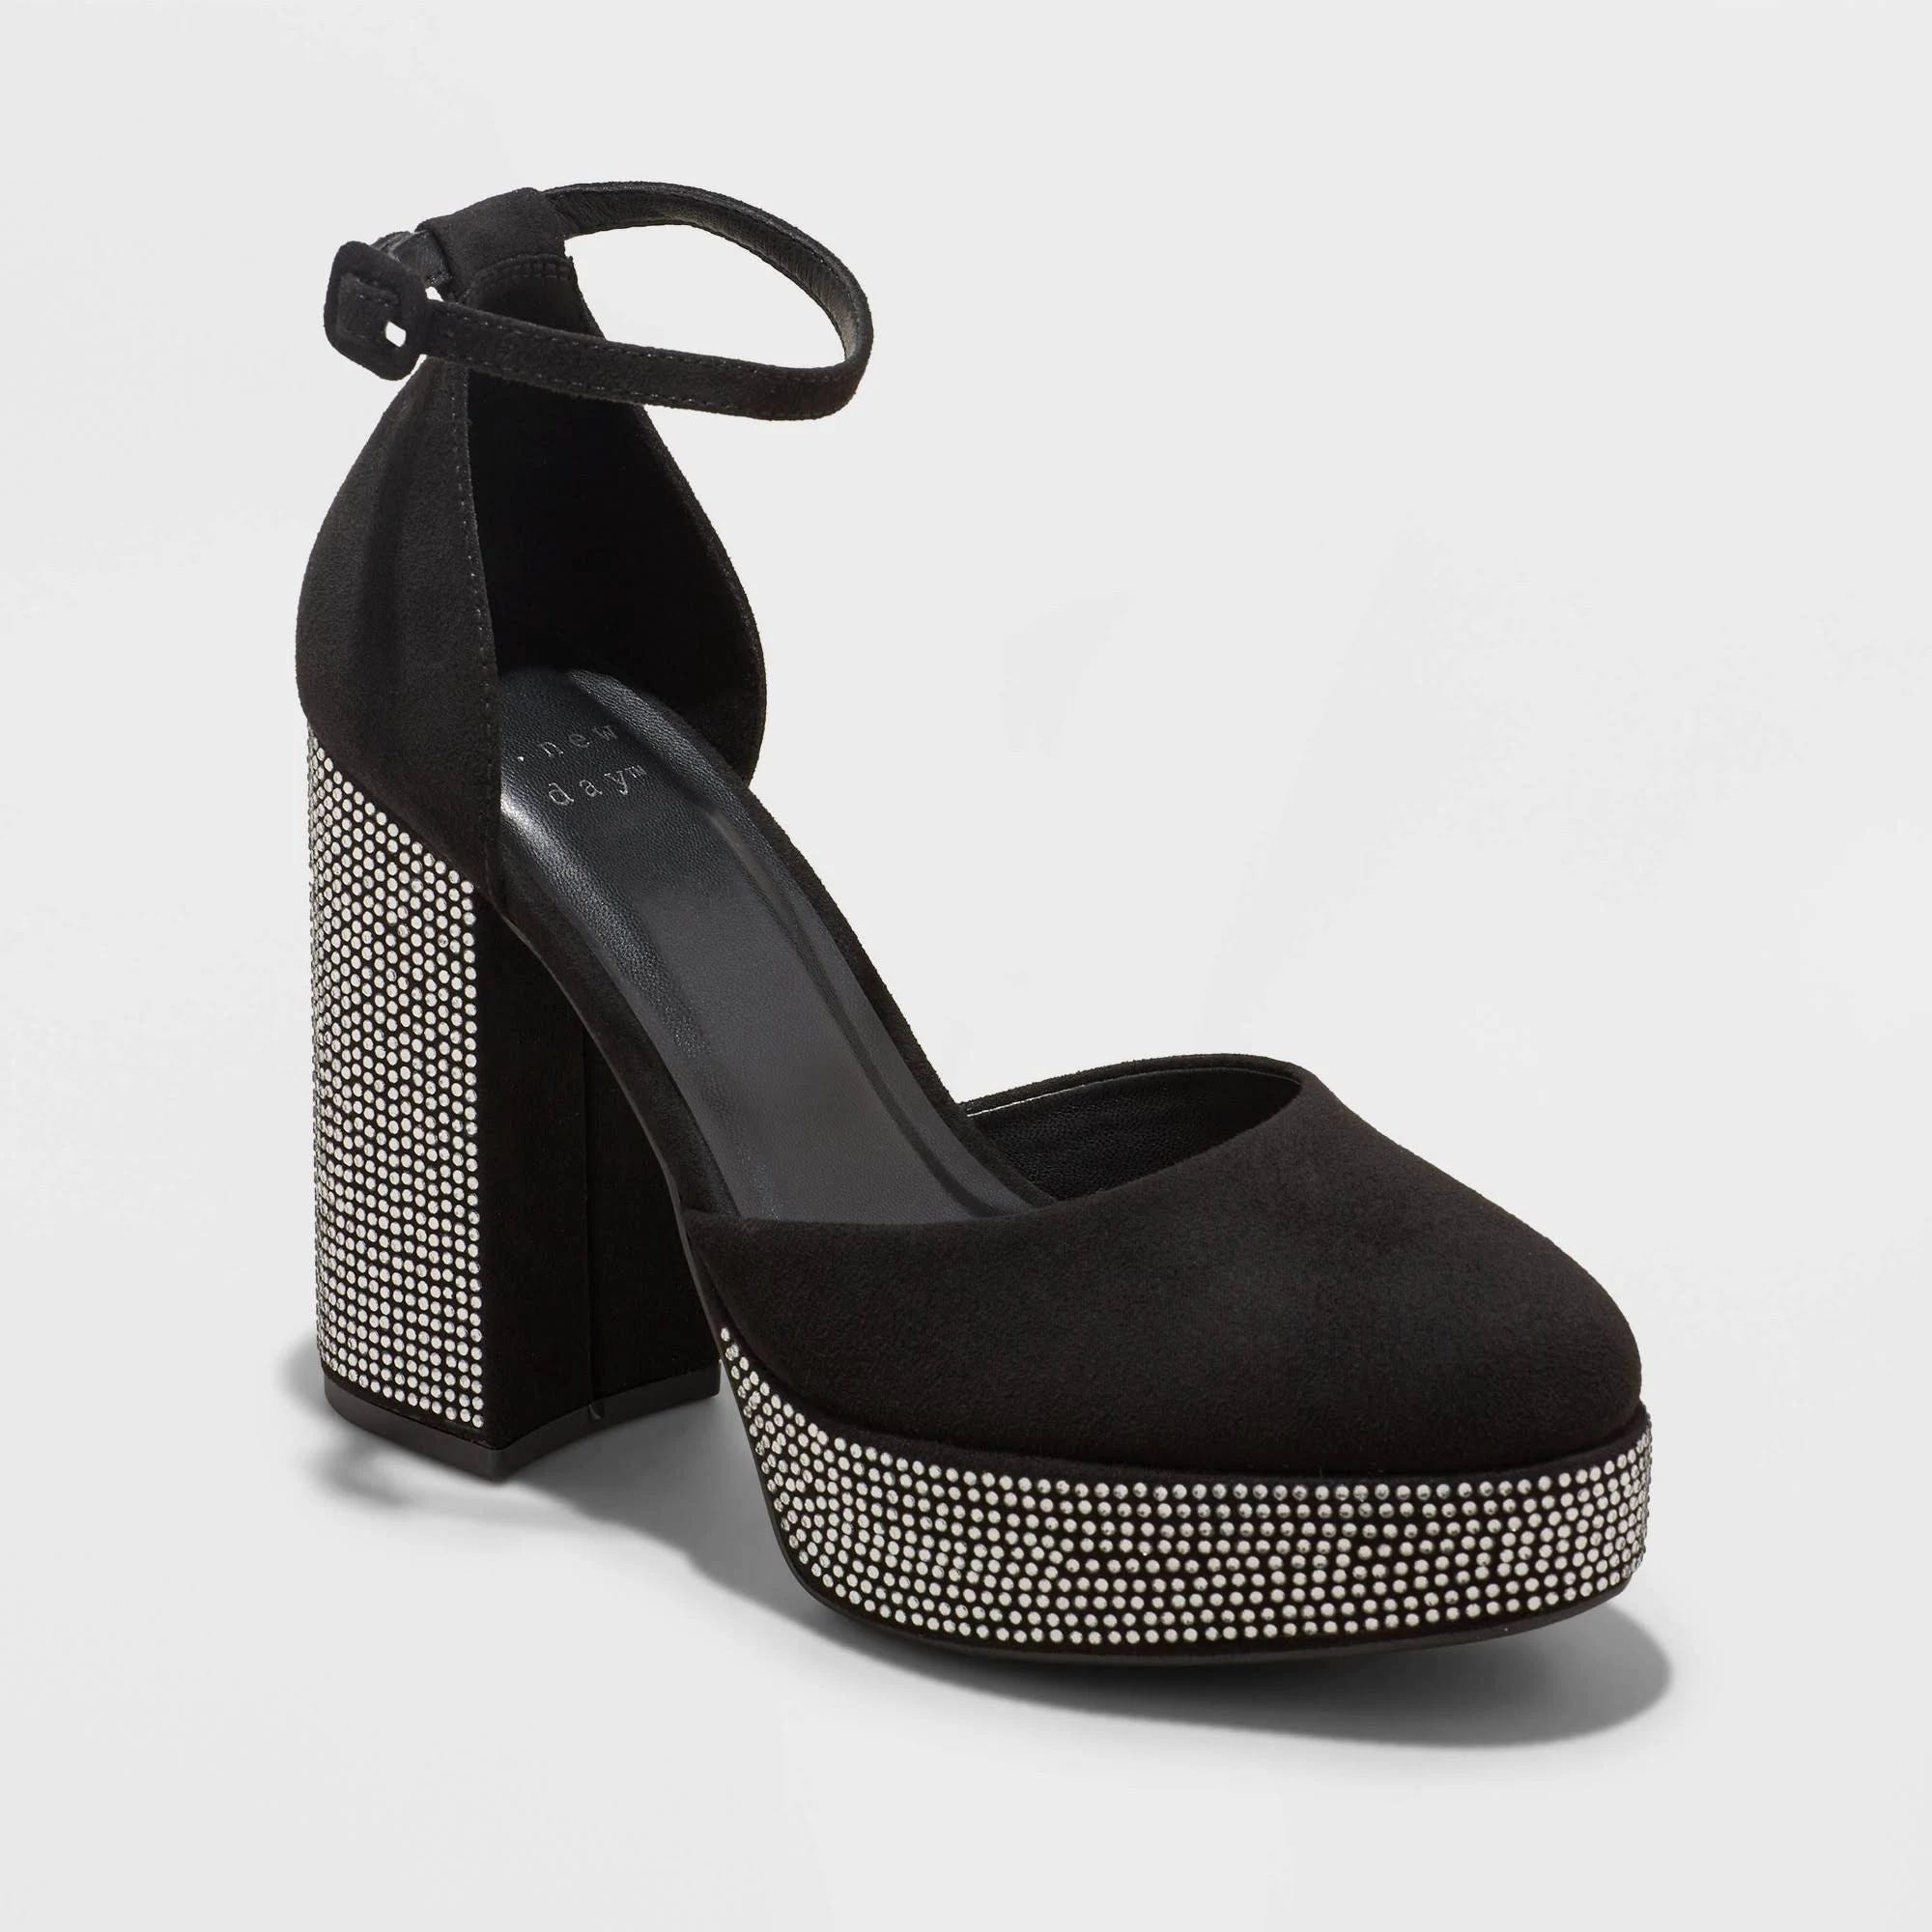 Sparkly Black Rhinestone Platform Heels for Party Wear | Image